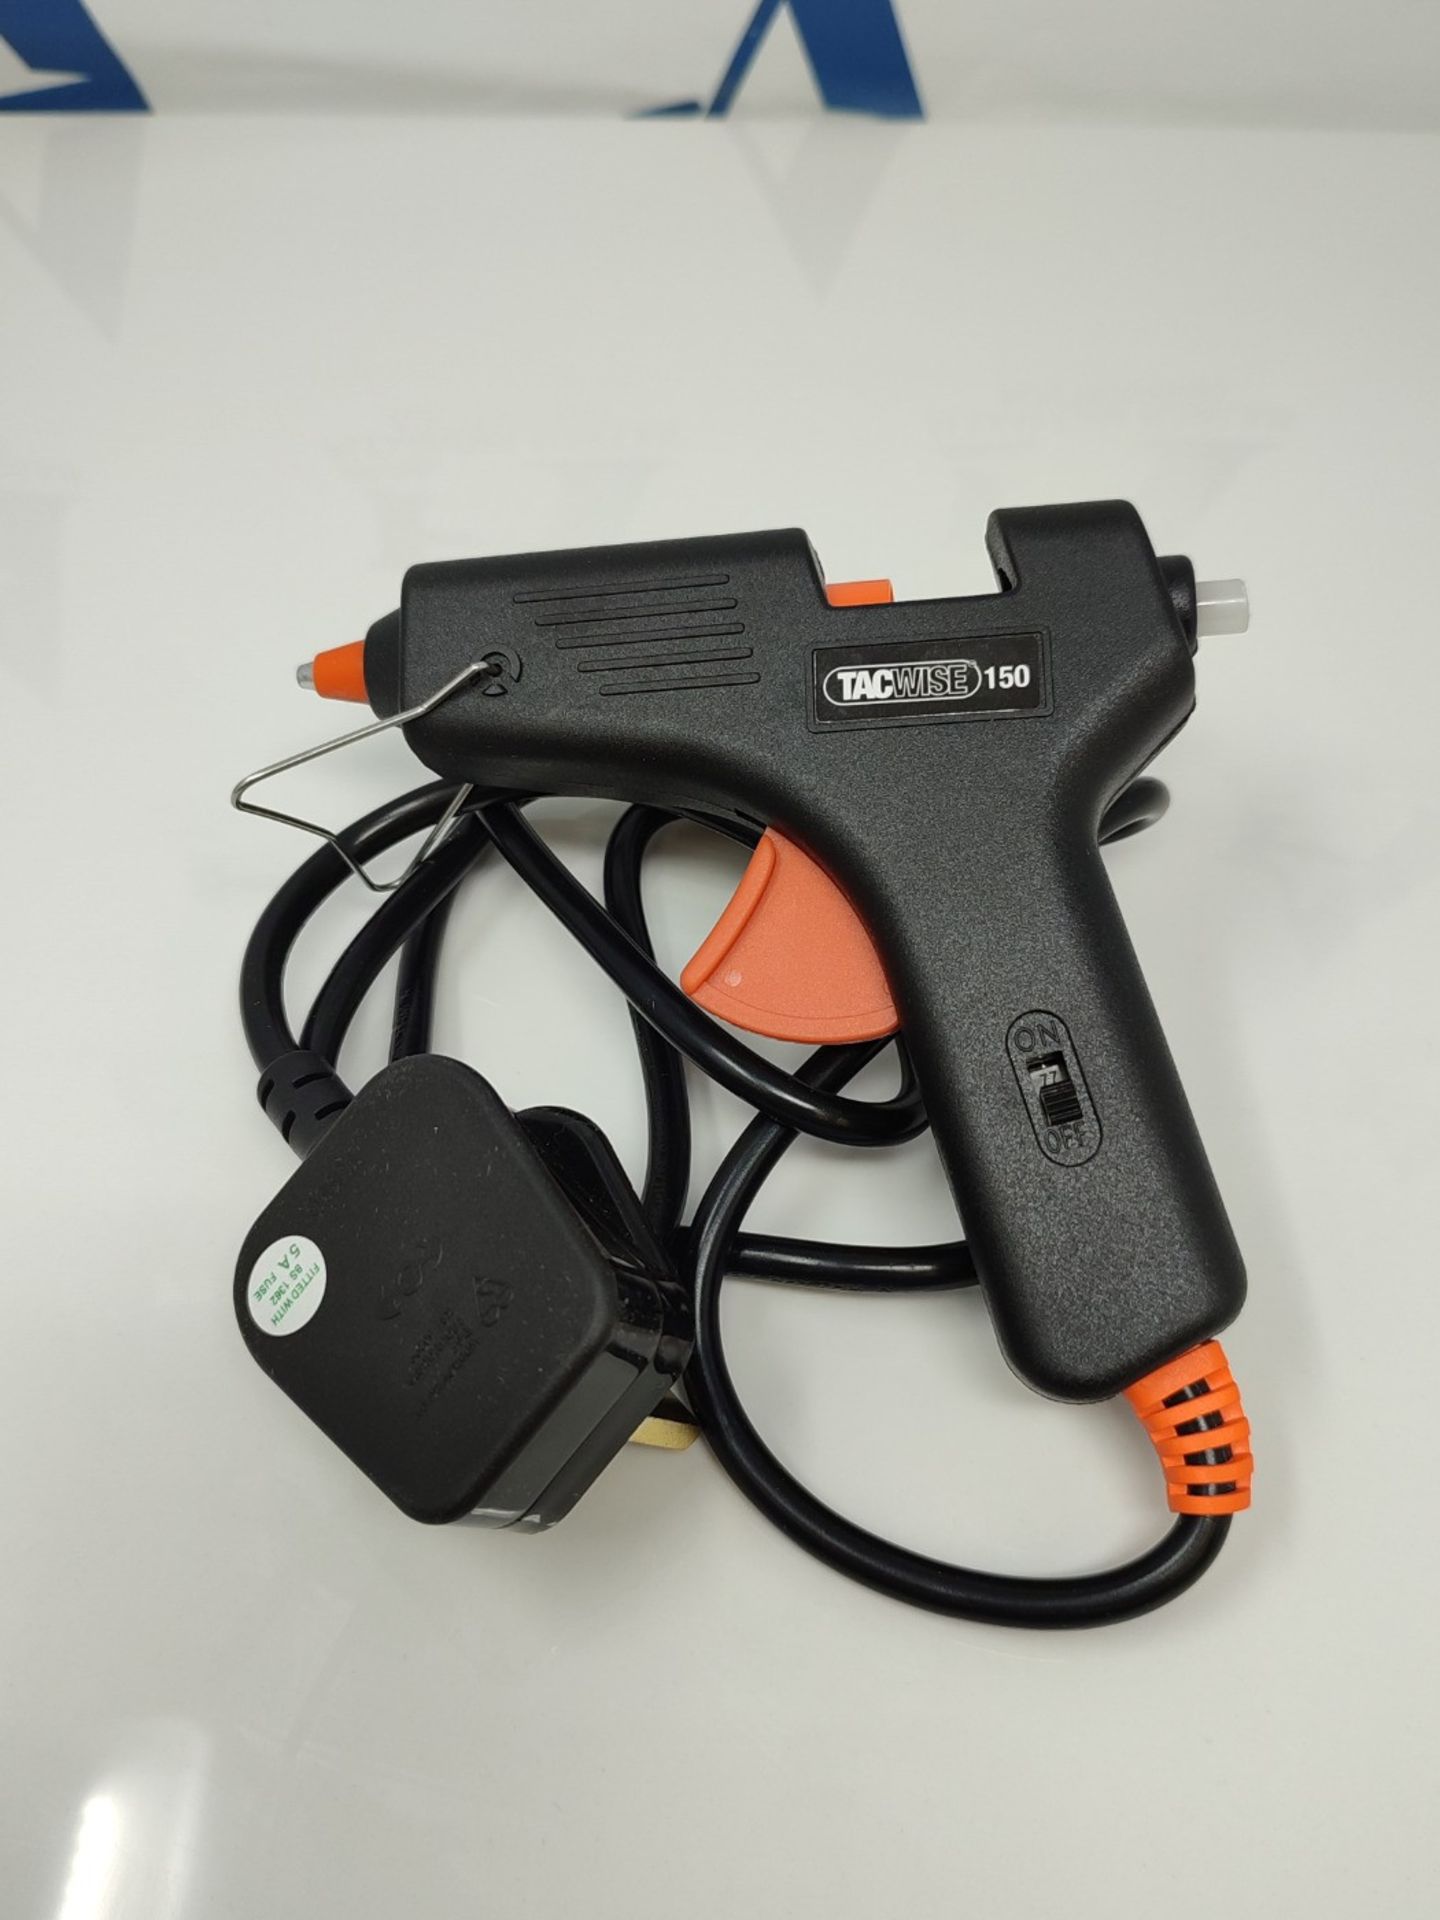 Tacwise 0465 150 Cool Melt Glue Gun With 2 Glue Sticks, Black - Image 2 of 3